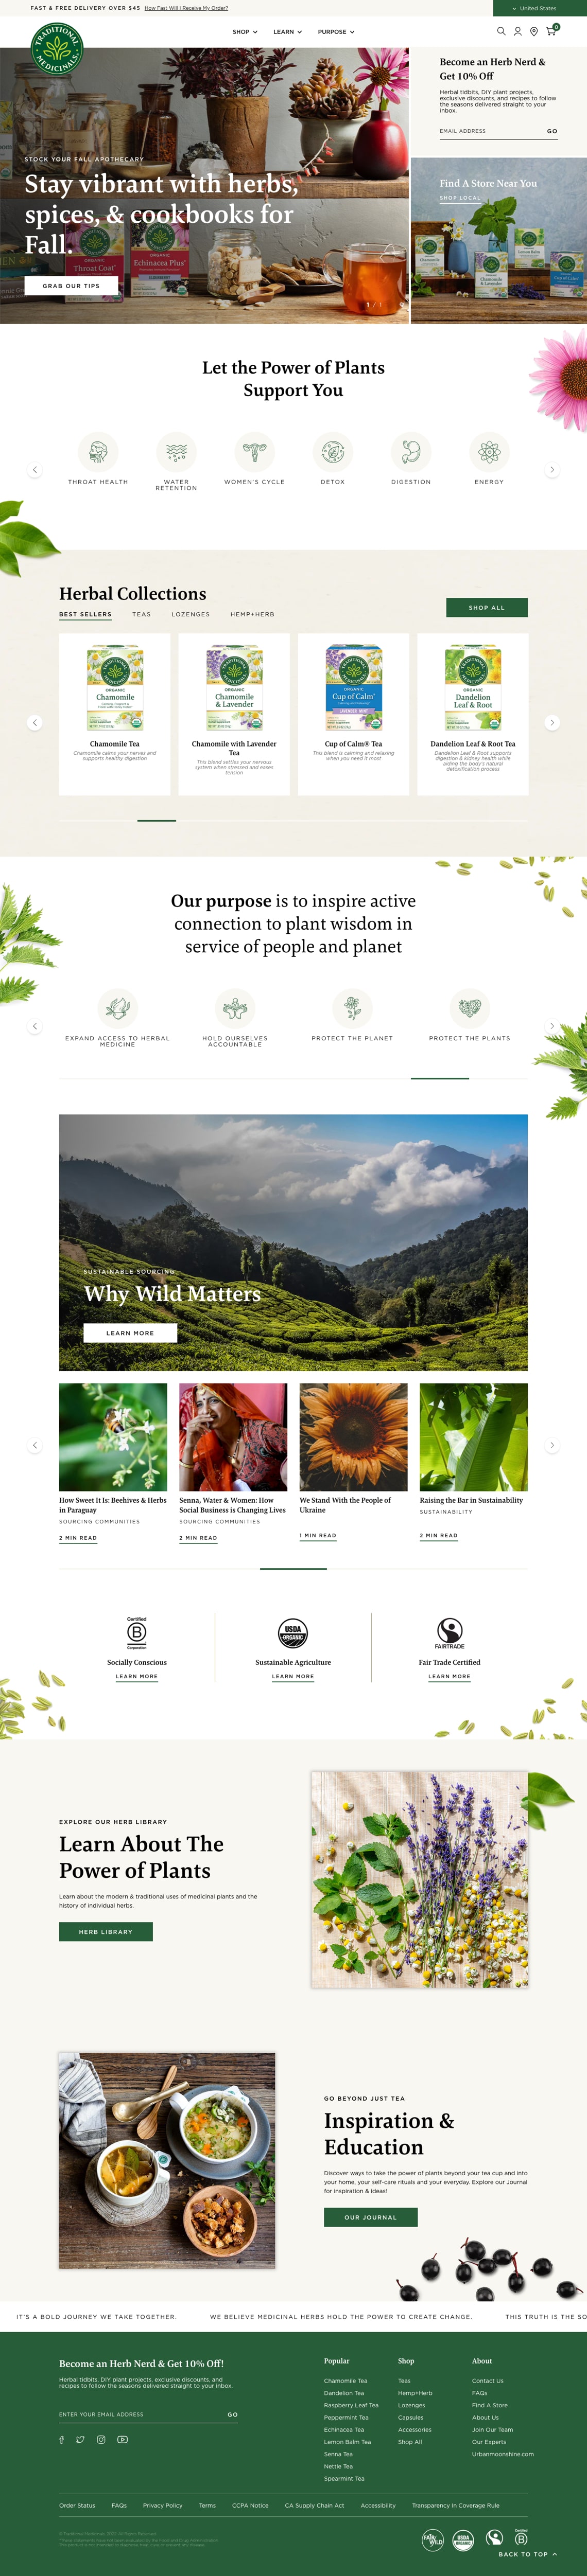 Traditional Medicinals - Homepage